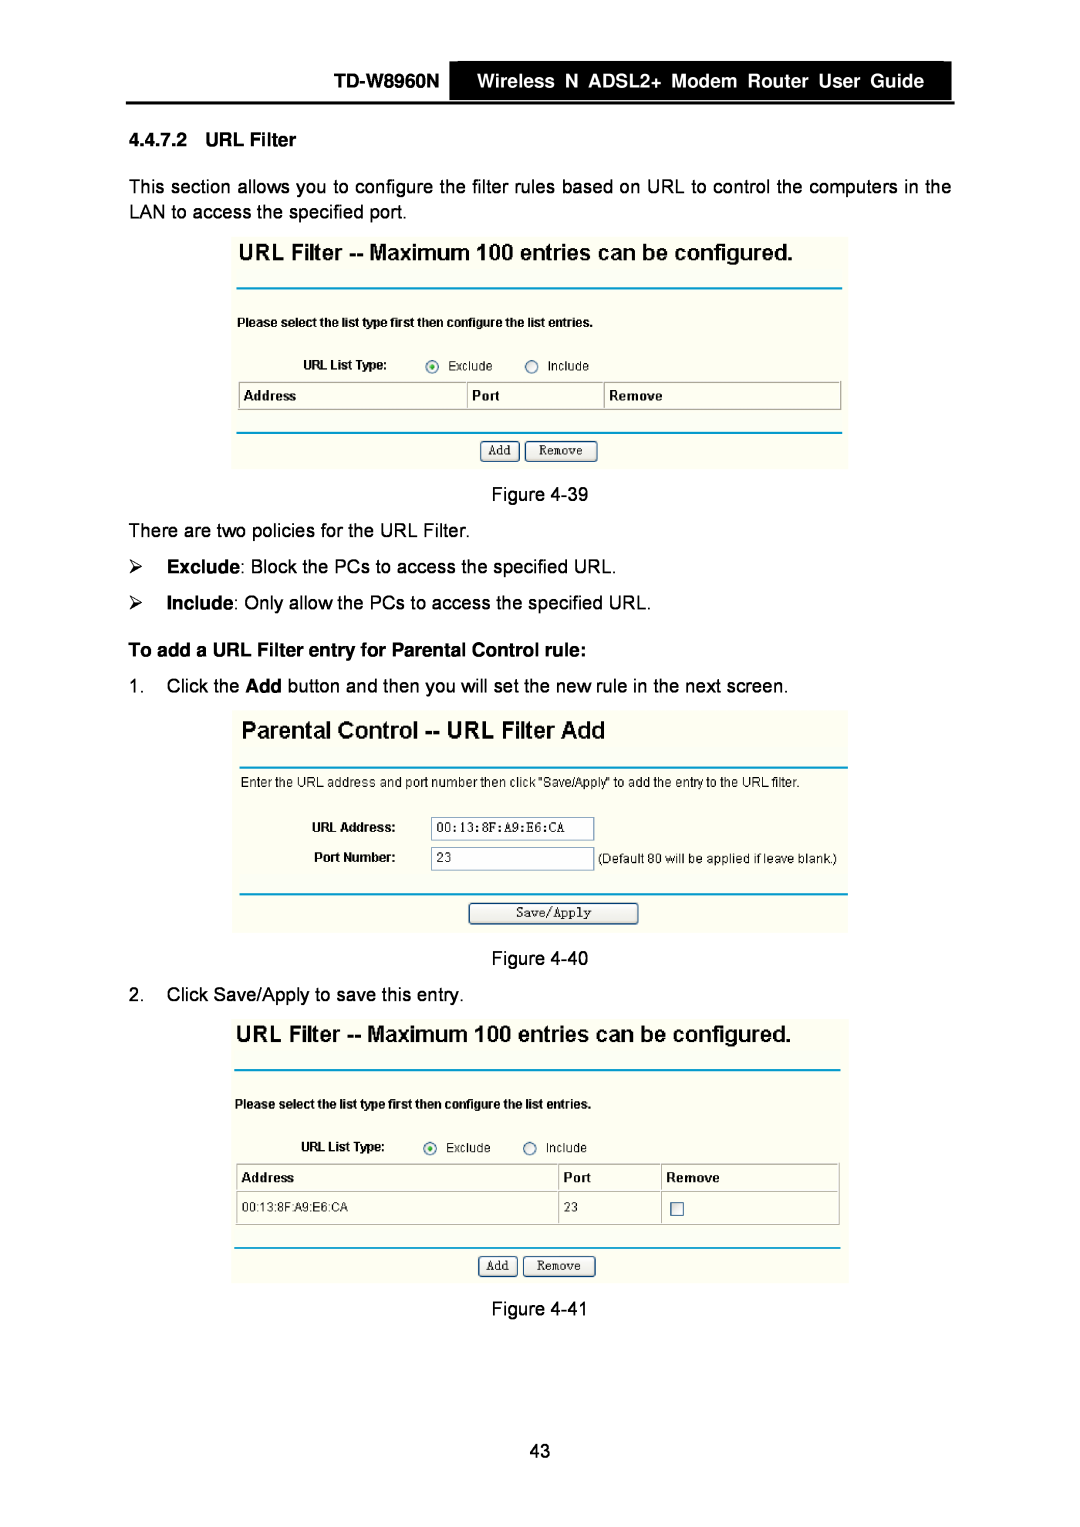 TP-Link manual TD-W8960N Wireless N ADSL2+ Modem Router User Guide, URL Filter 